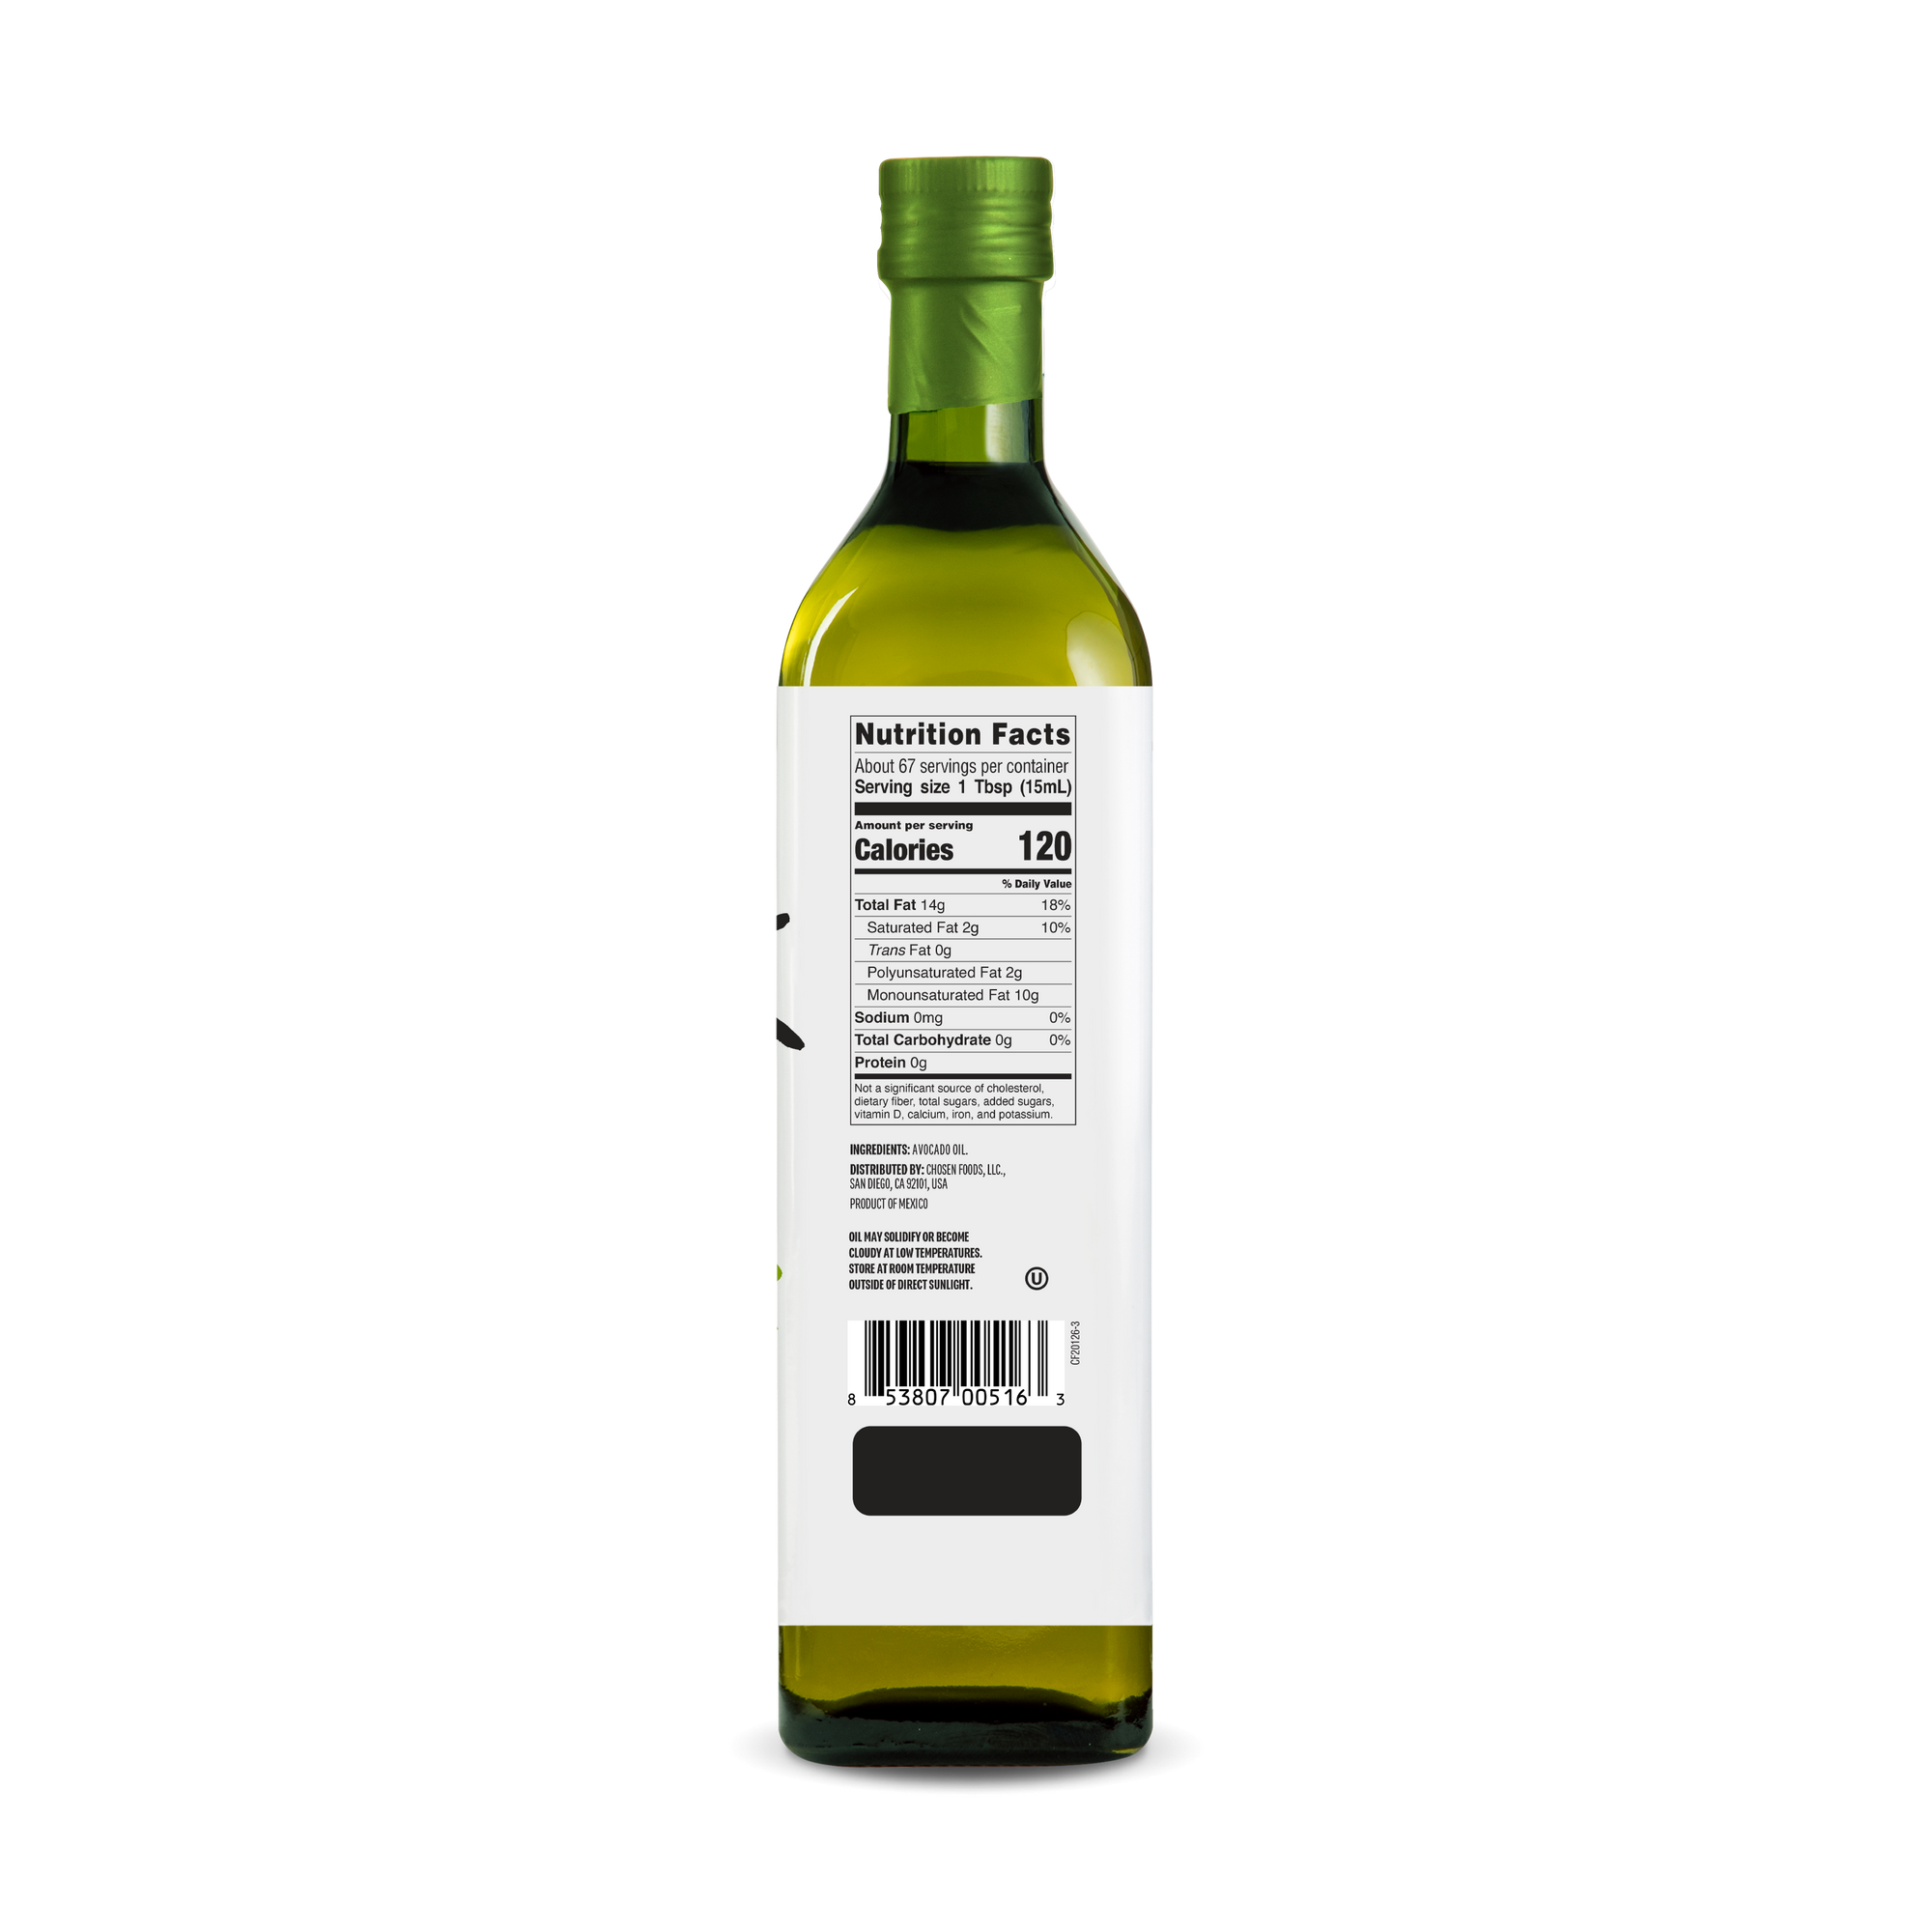 100% California Extra Virgin Olive Oil Spray 5 oz